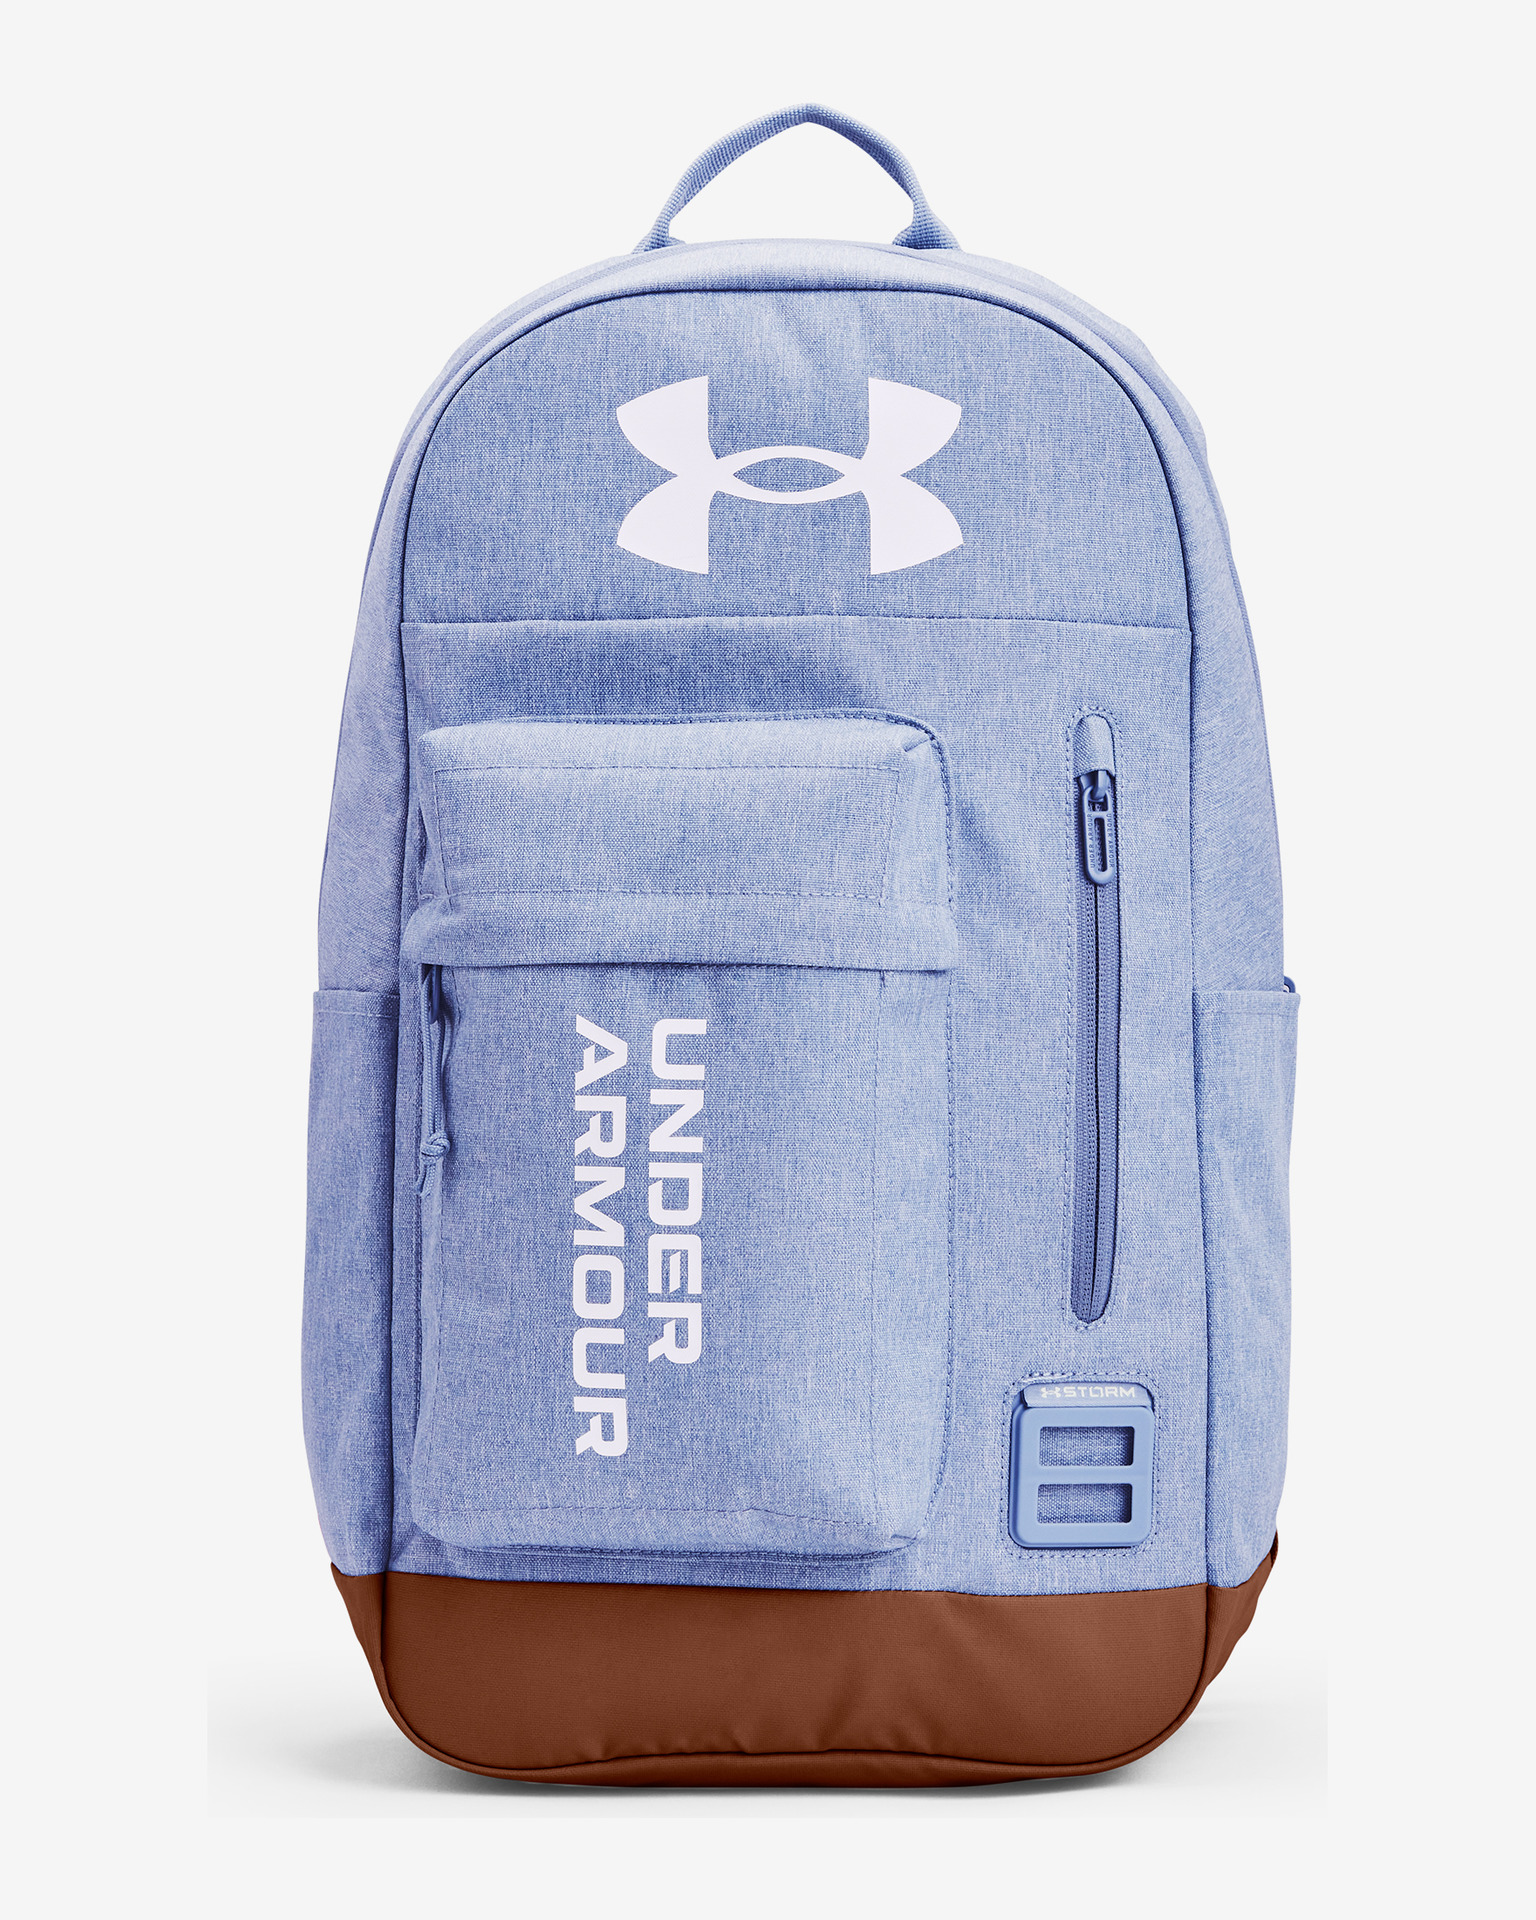 Under Armour Patterson Backpack Blue Water Repellent Rucksack Adjustable Straps 